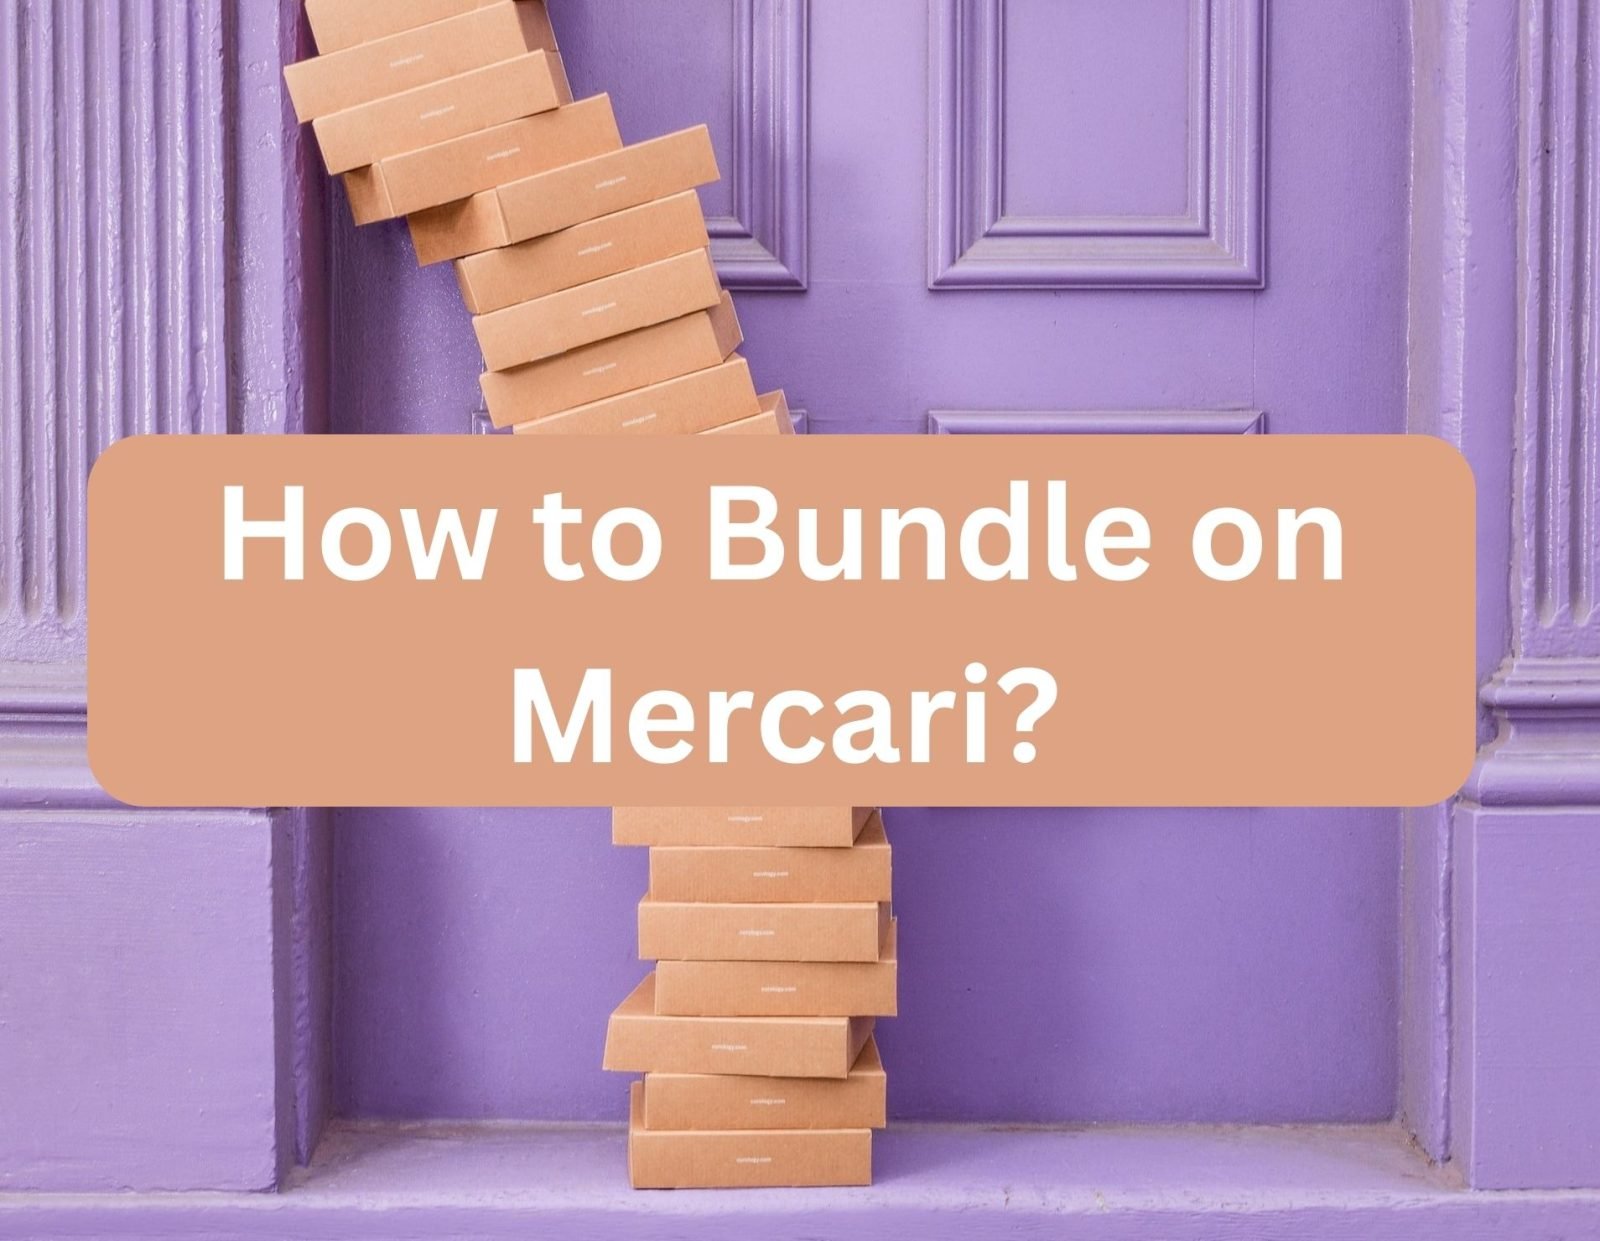 How to Bundle on Mercari listing